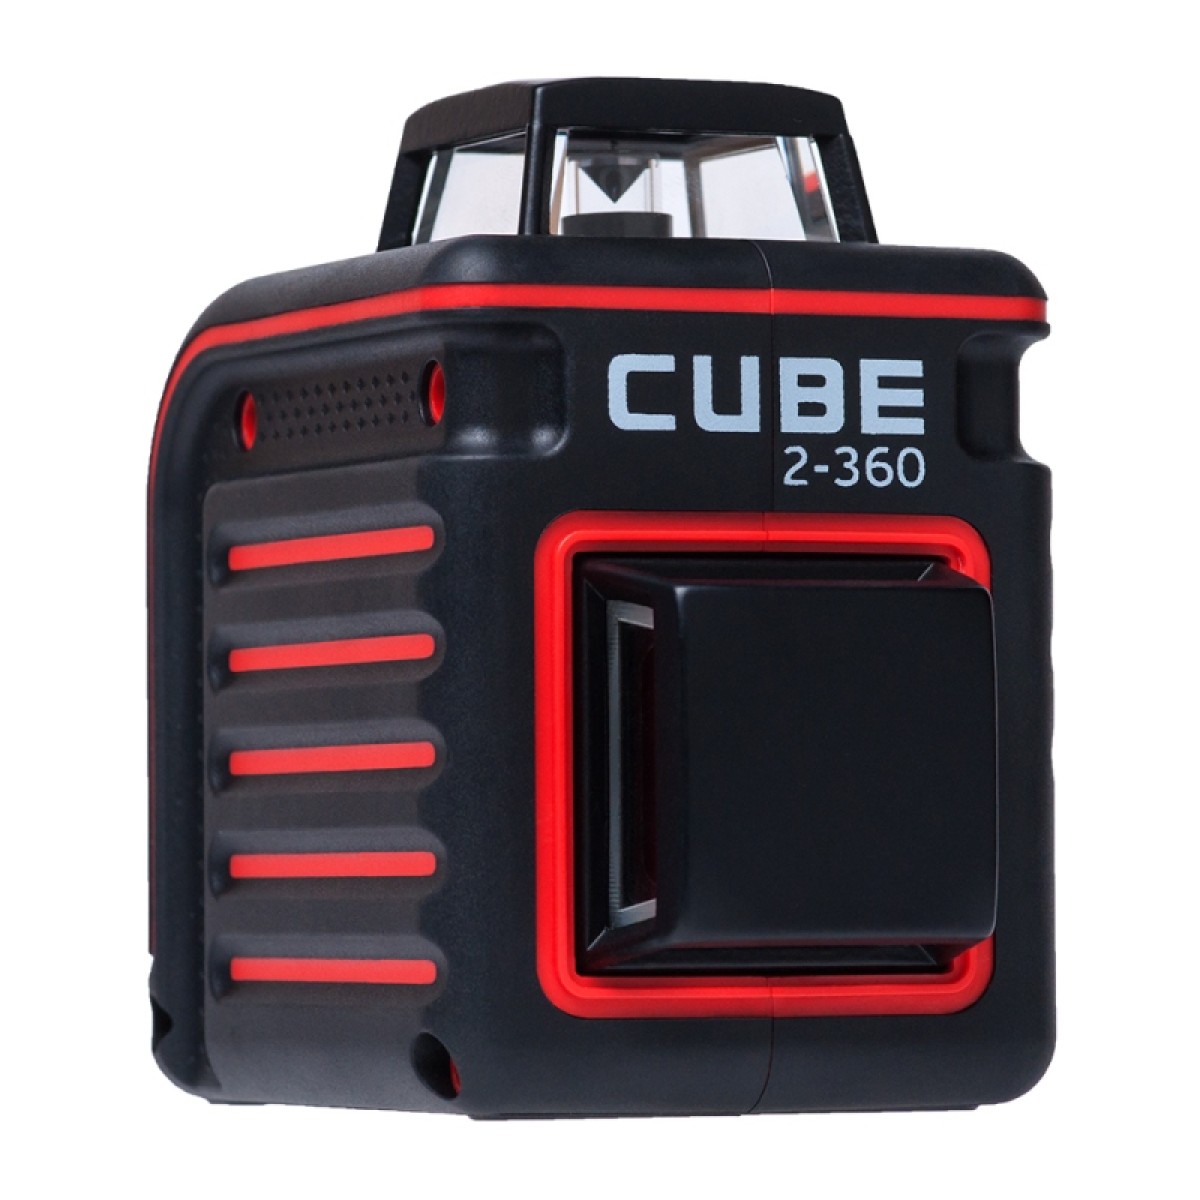 Ada cube 360 basic. Лазерный уровень ada Cube 360. Лазерный уровень ada Cube 2-360. Ada instruments Cube 2-360 Basic Edition. Ada Cube 2-360 professional Edition а00449.